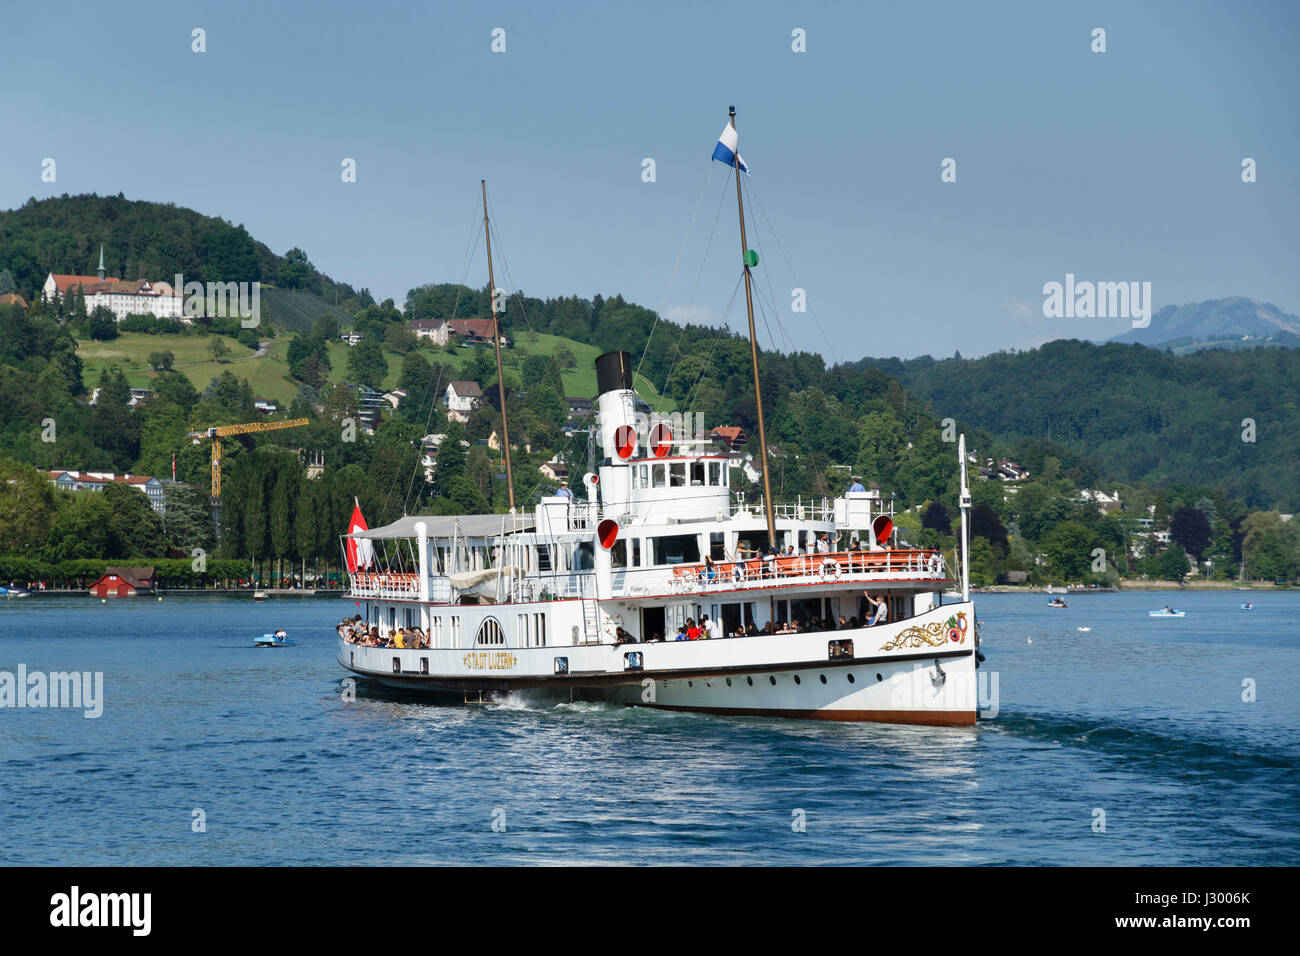 Paddle steamer steam boat on lake Lucerne, Switzerland Stock Photo